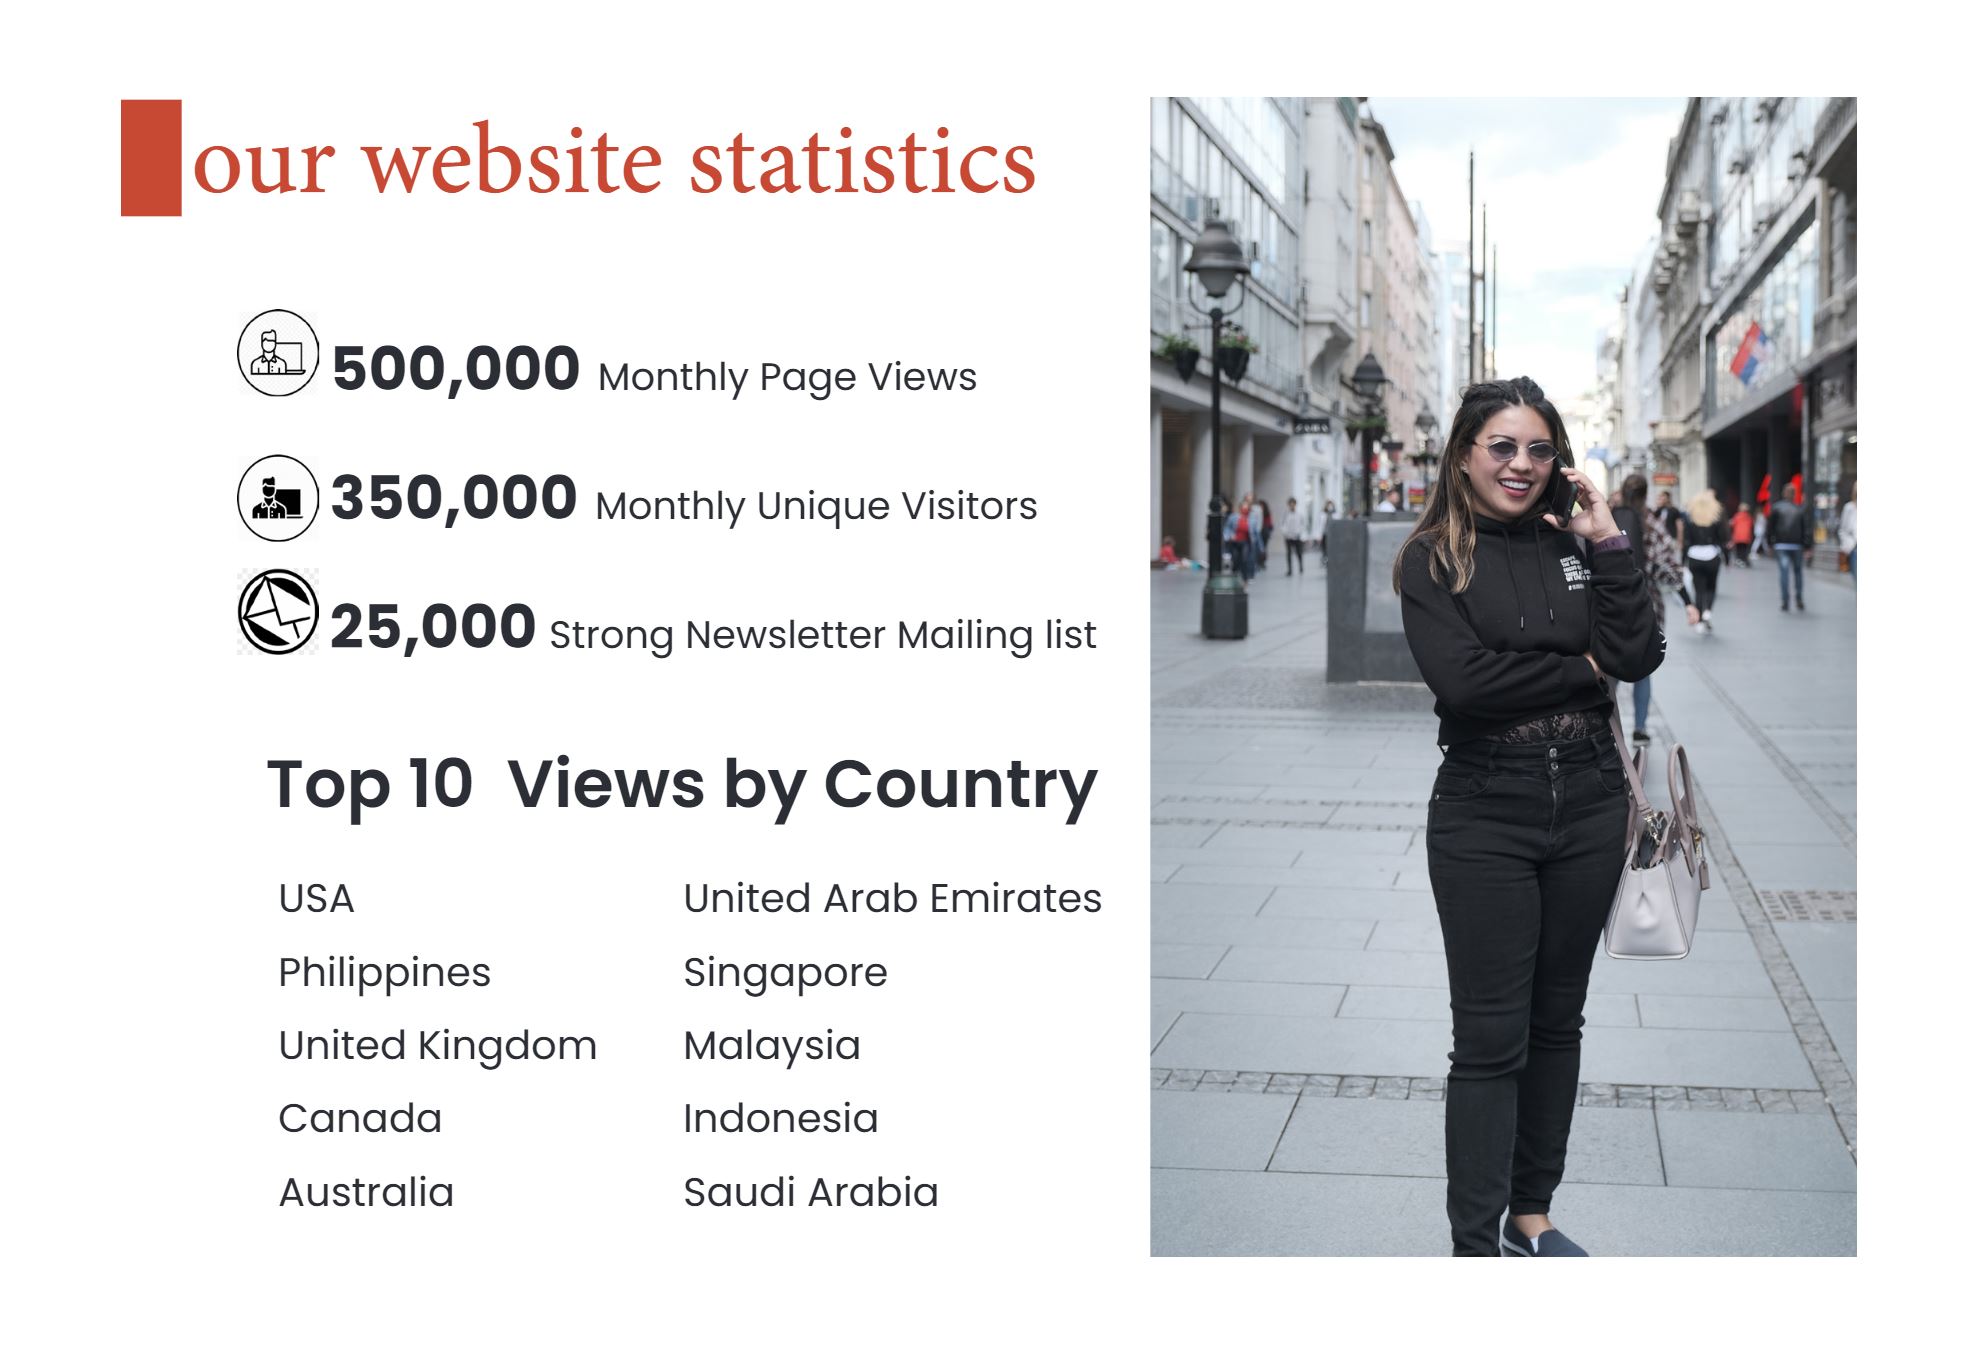 website stats